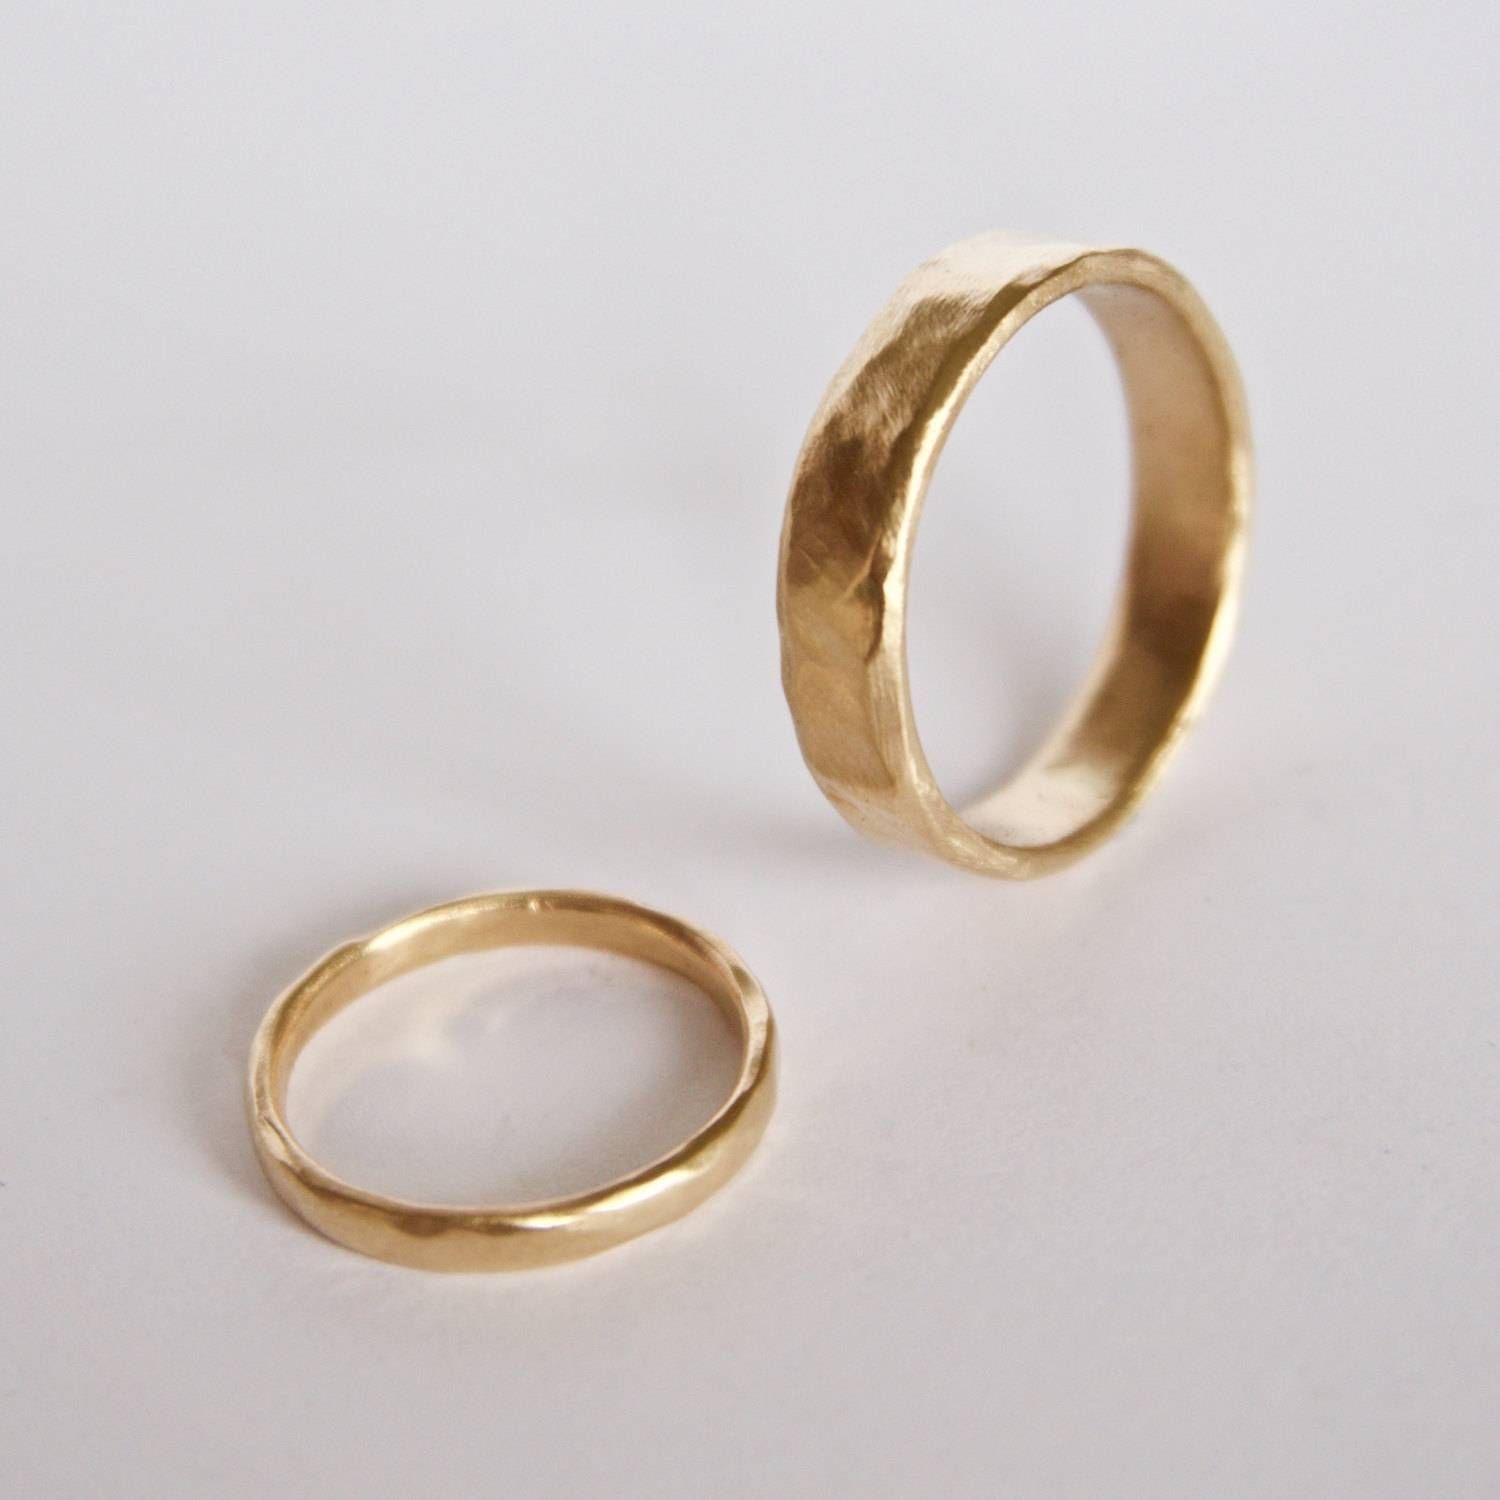 18 Carat Diamond Ring Tags : Great Wedding Rings 18 Karat Gold With 2018 18 Carat Gold Wedding Bands (View 6 of 16)